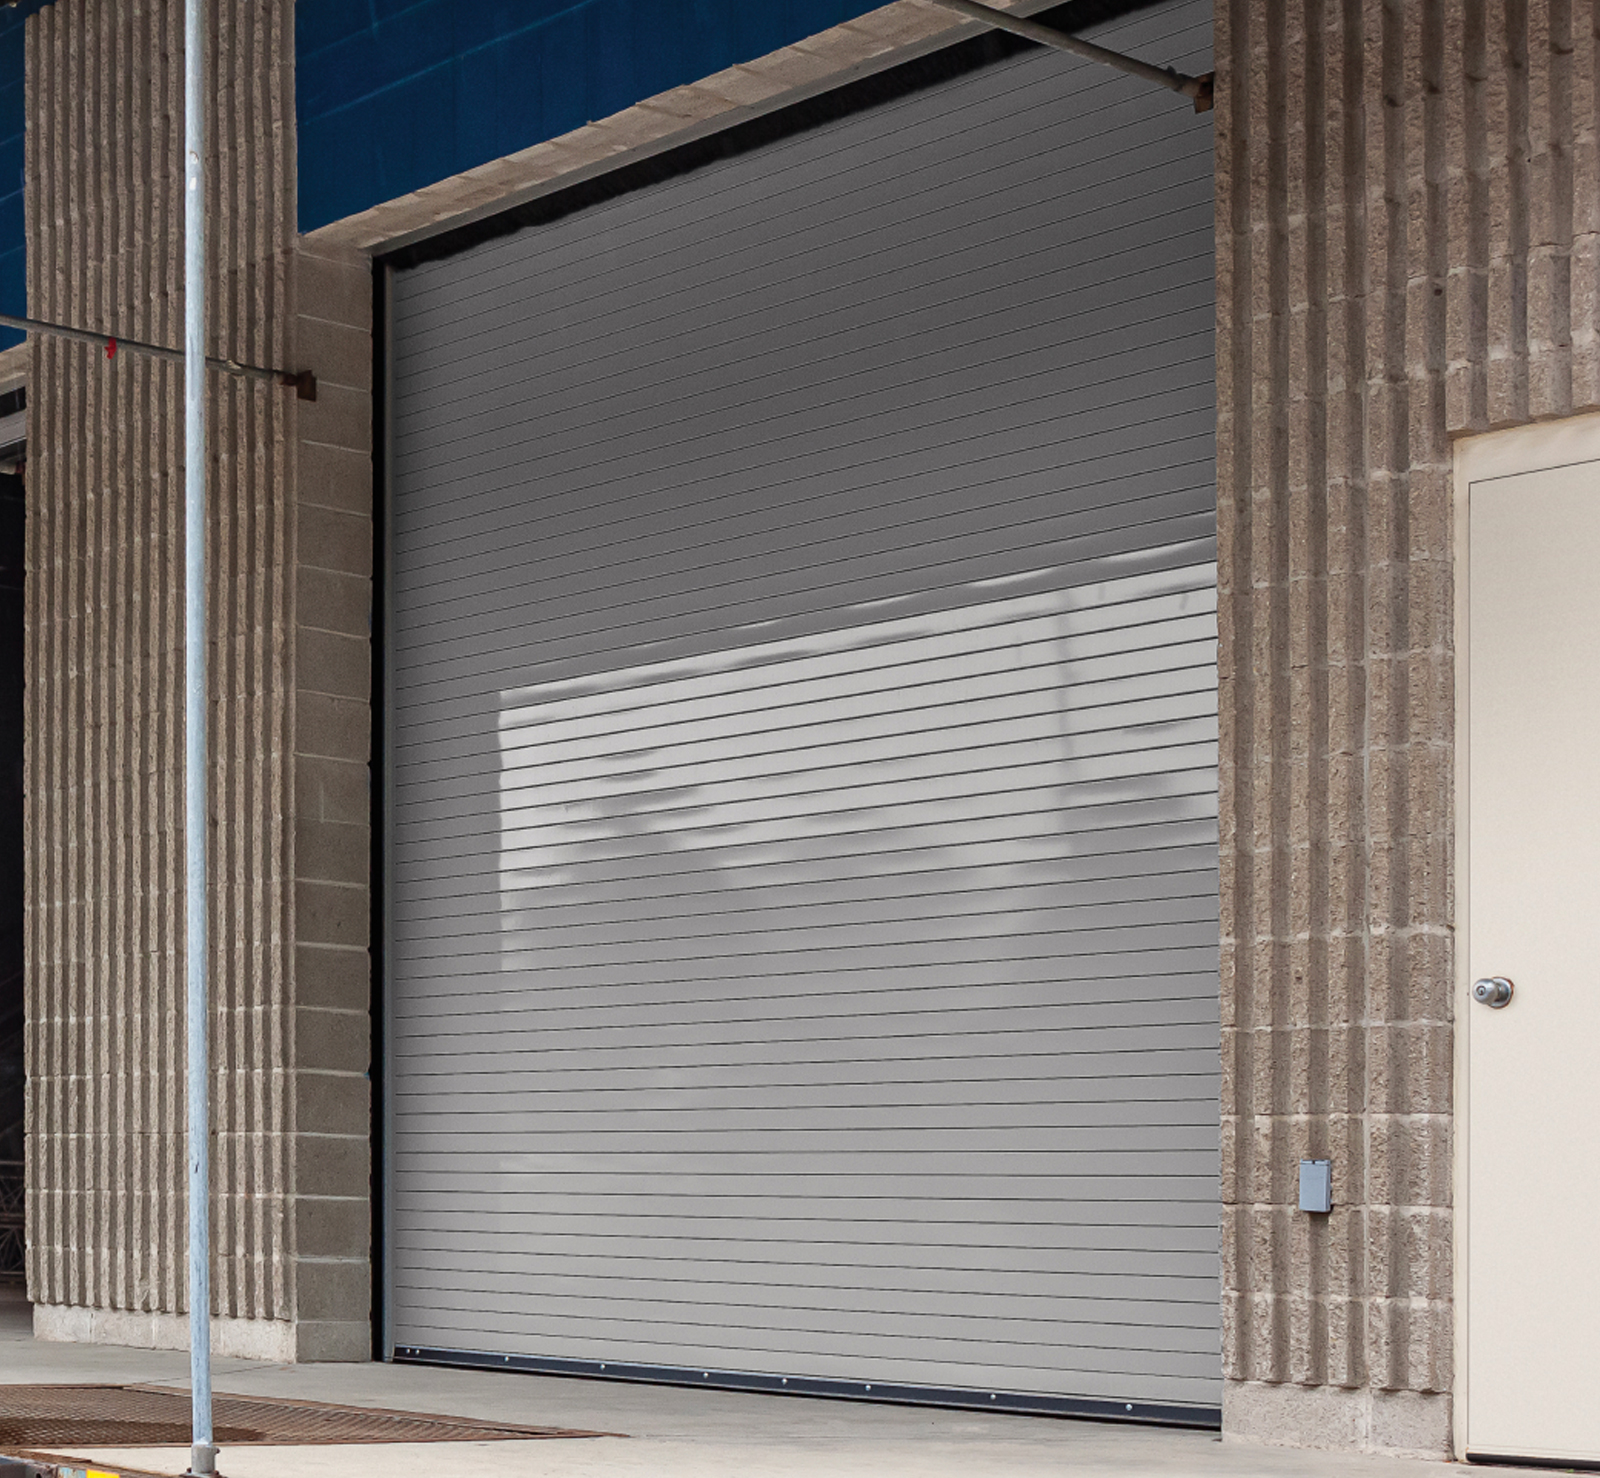 Residential garage door design by Clopay. Design is called Modern Steel.